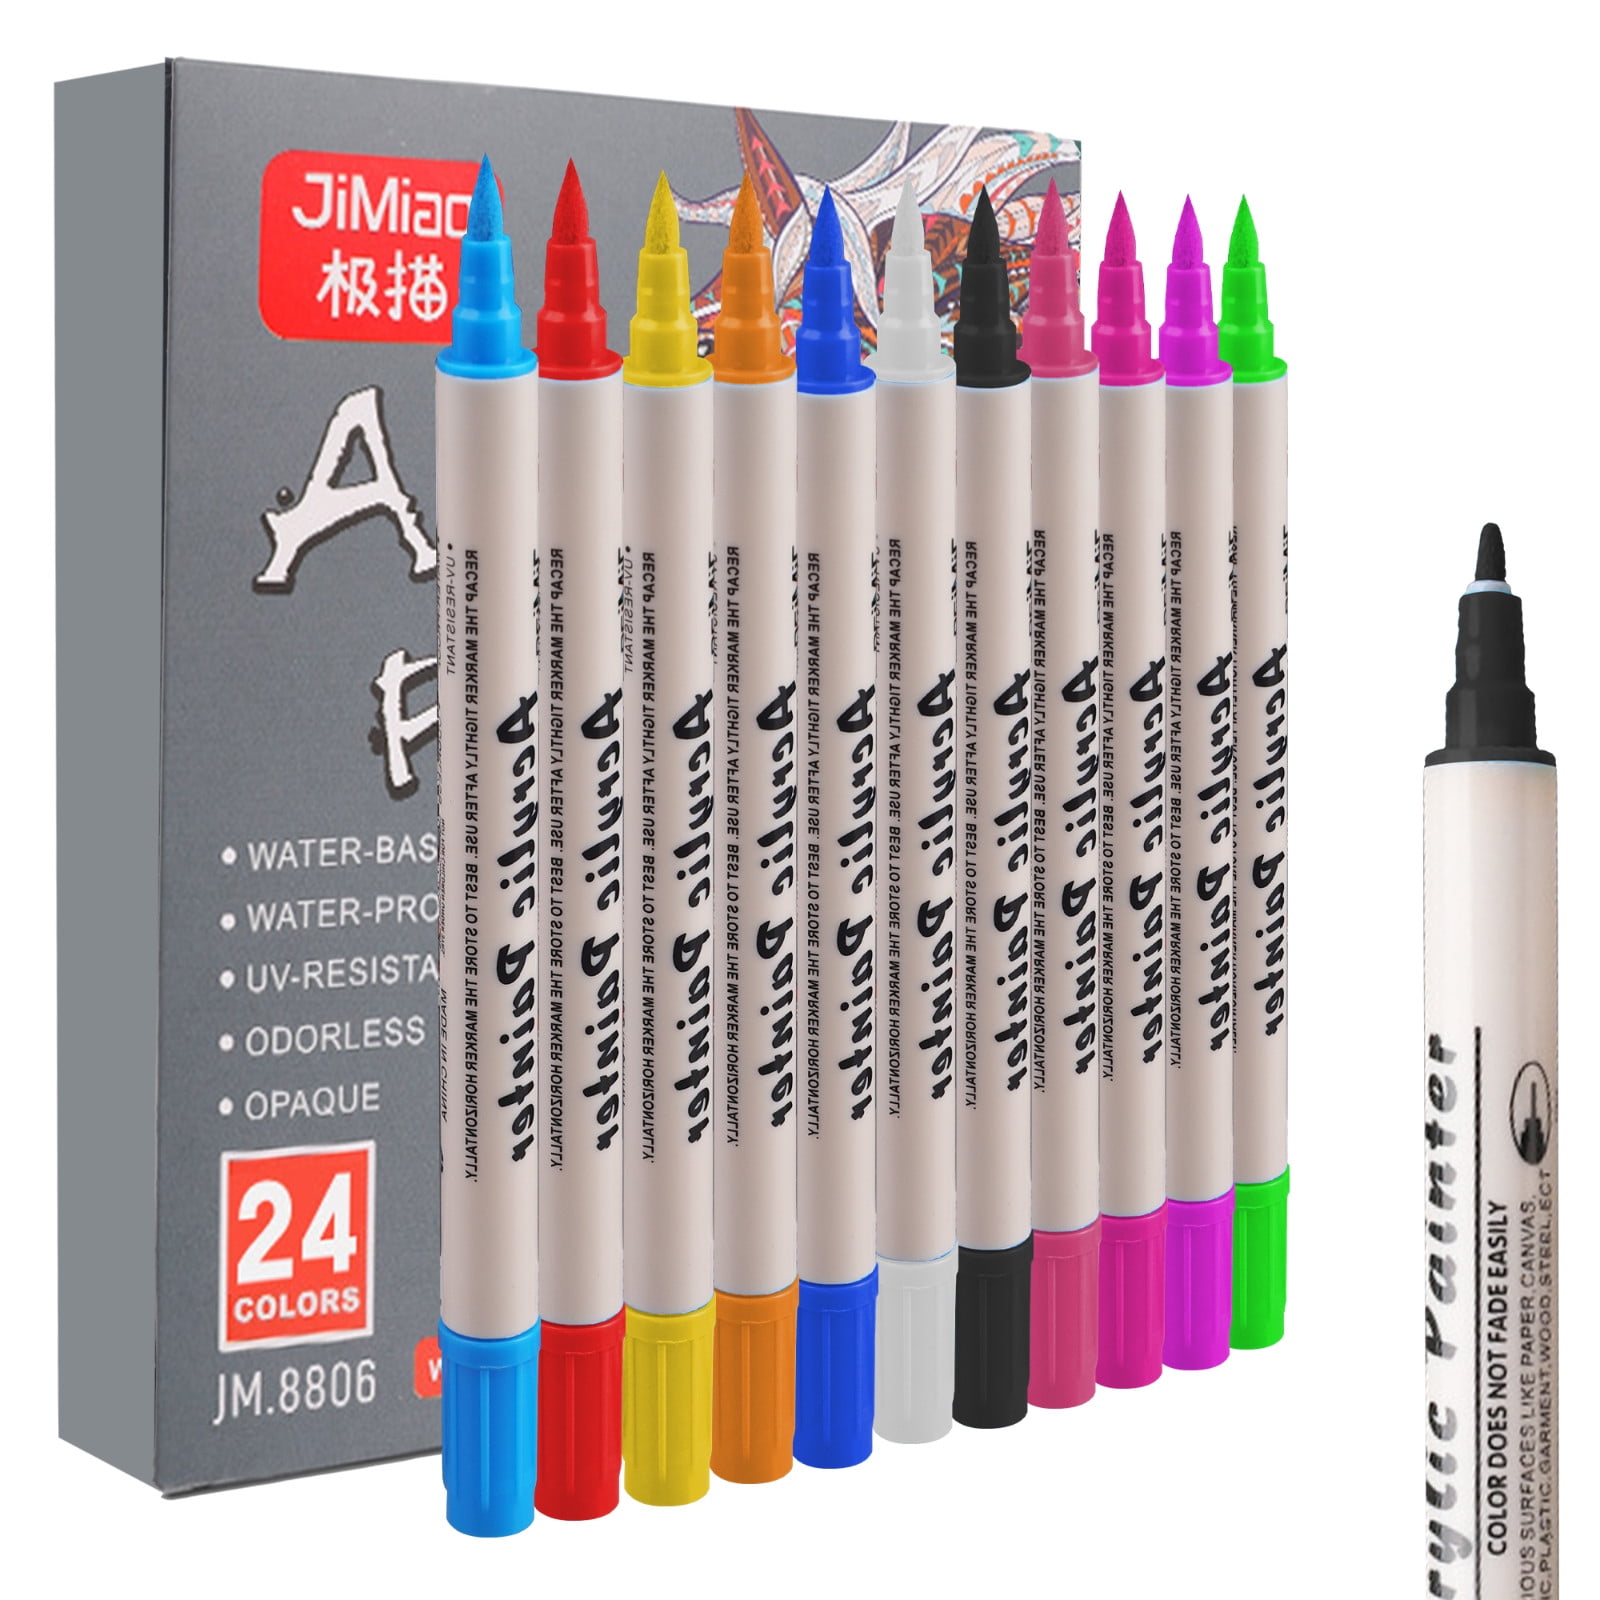 LIGHTWISH 60 Colors Acrylic Paint Pens,30Pcs Dual Brush Tip & Two Colors  Acrylic Paint Markers,Waterproof,Quick Dry Acrylic Paint Markers for